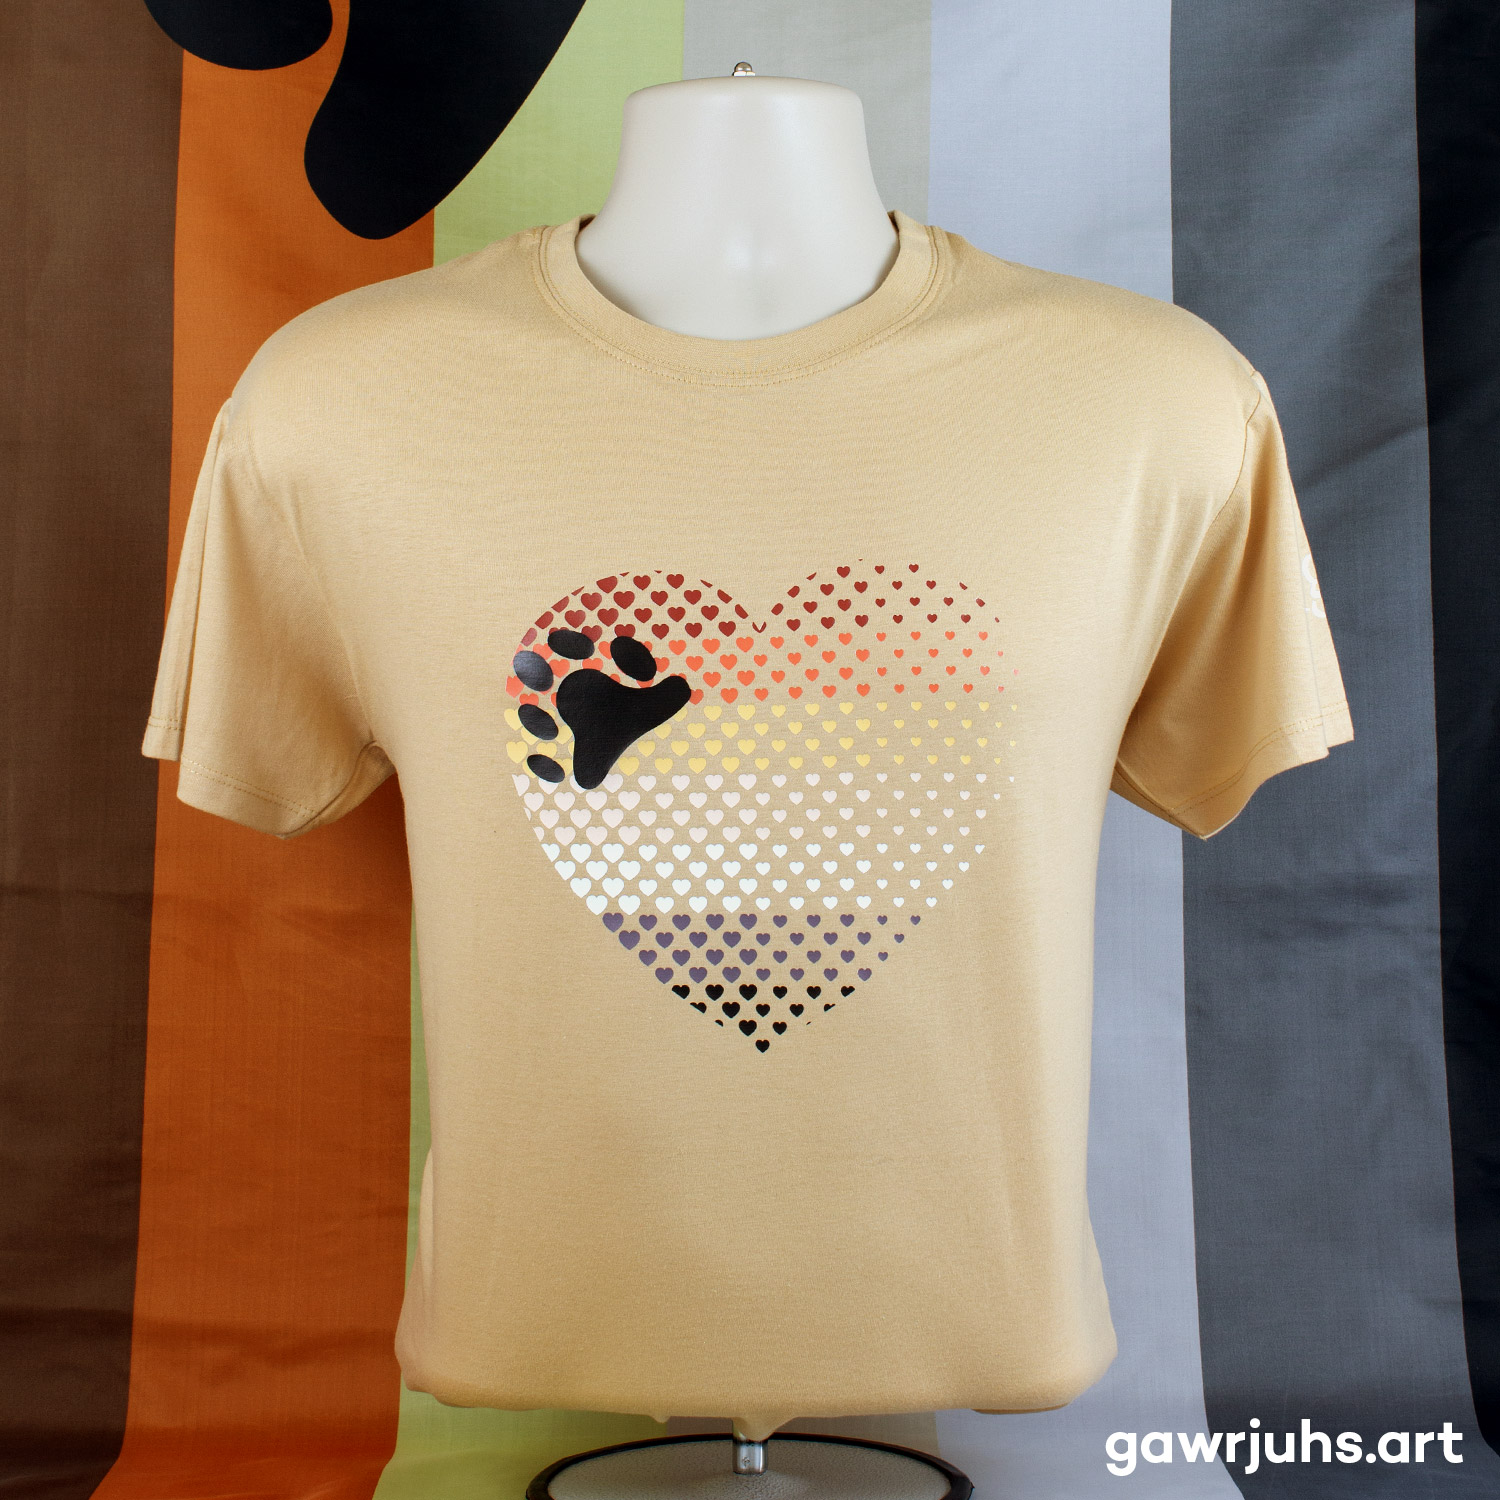 gawrjuhs-art-love-heart-bear-brotherhood-tshirt-front-view-flag-background-1500px